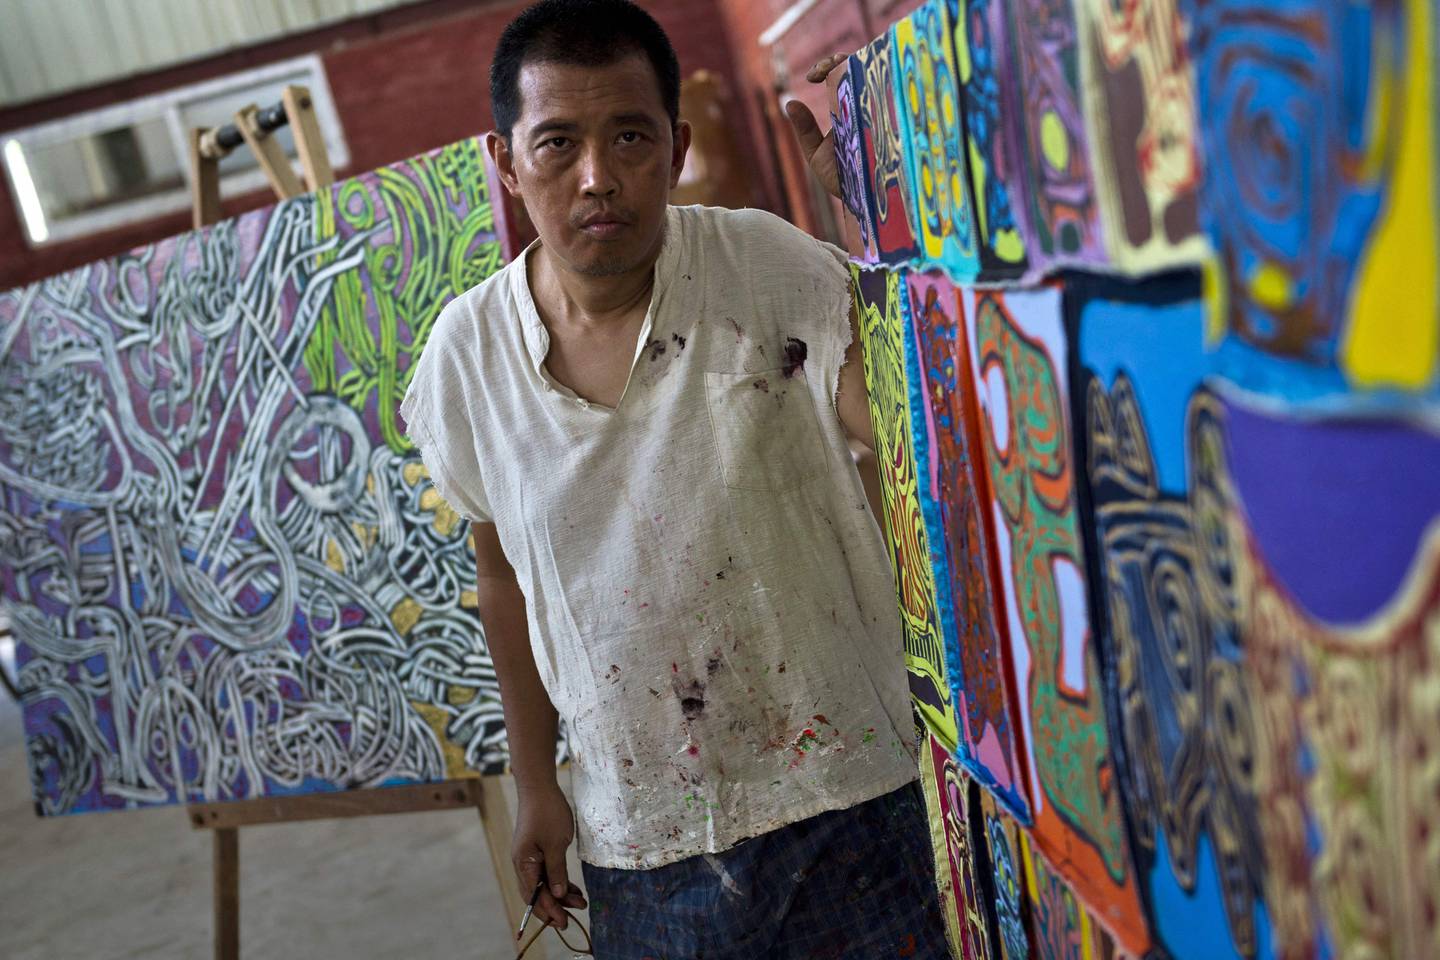 Myanmar artist Htein Lin in his studio in Yangon in 2015. AFP